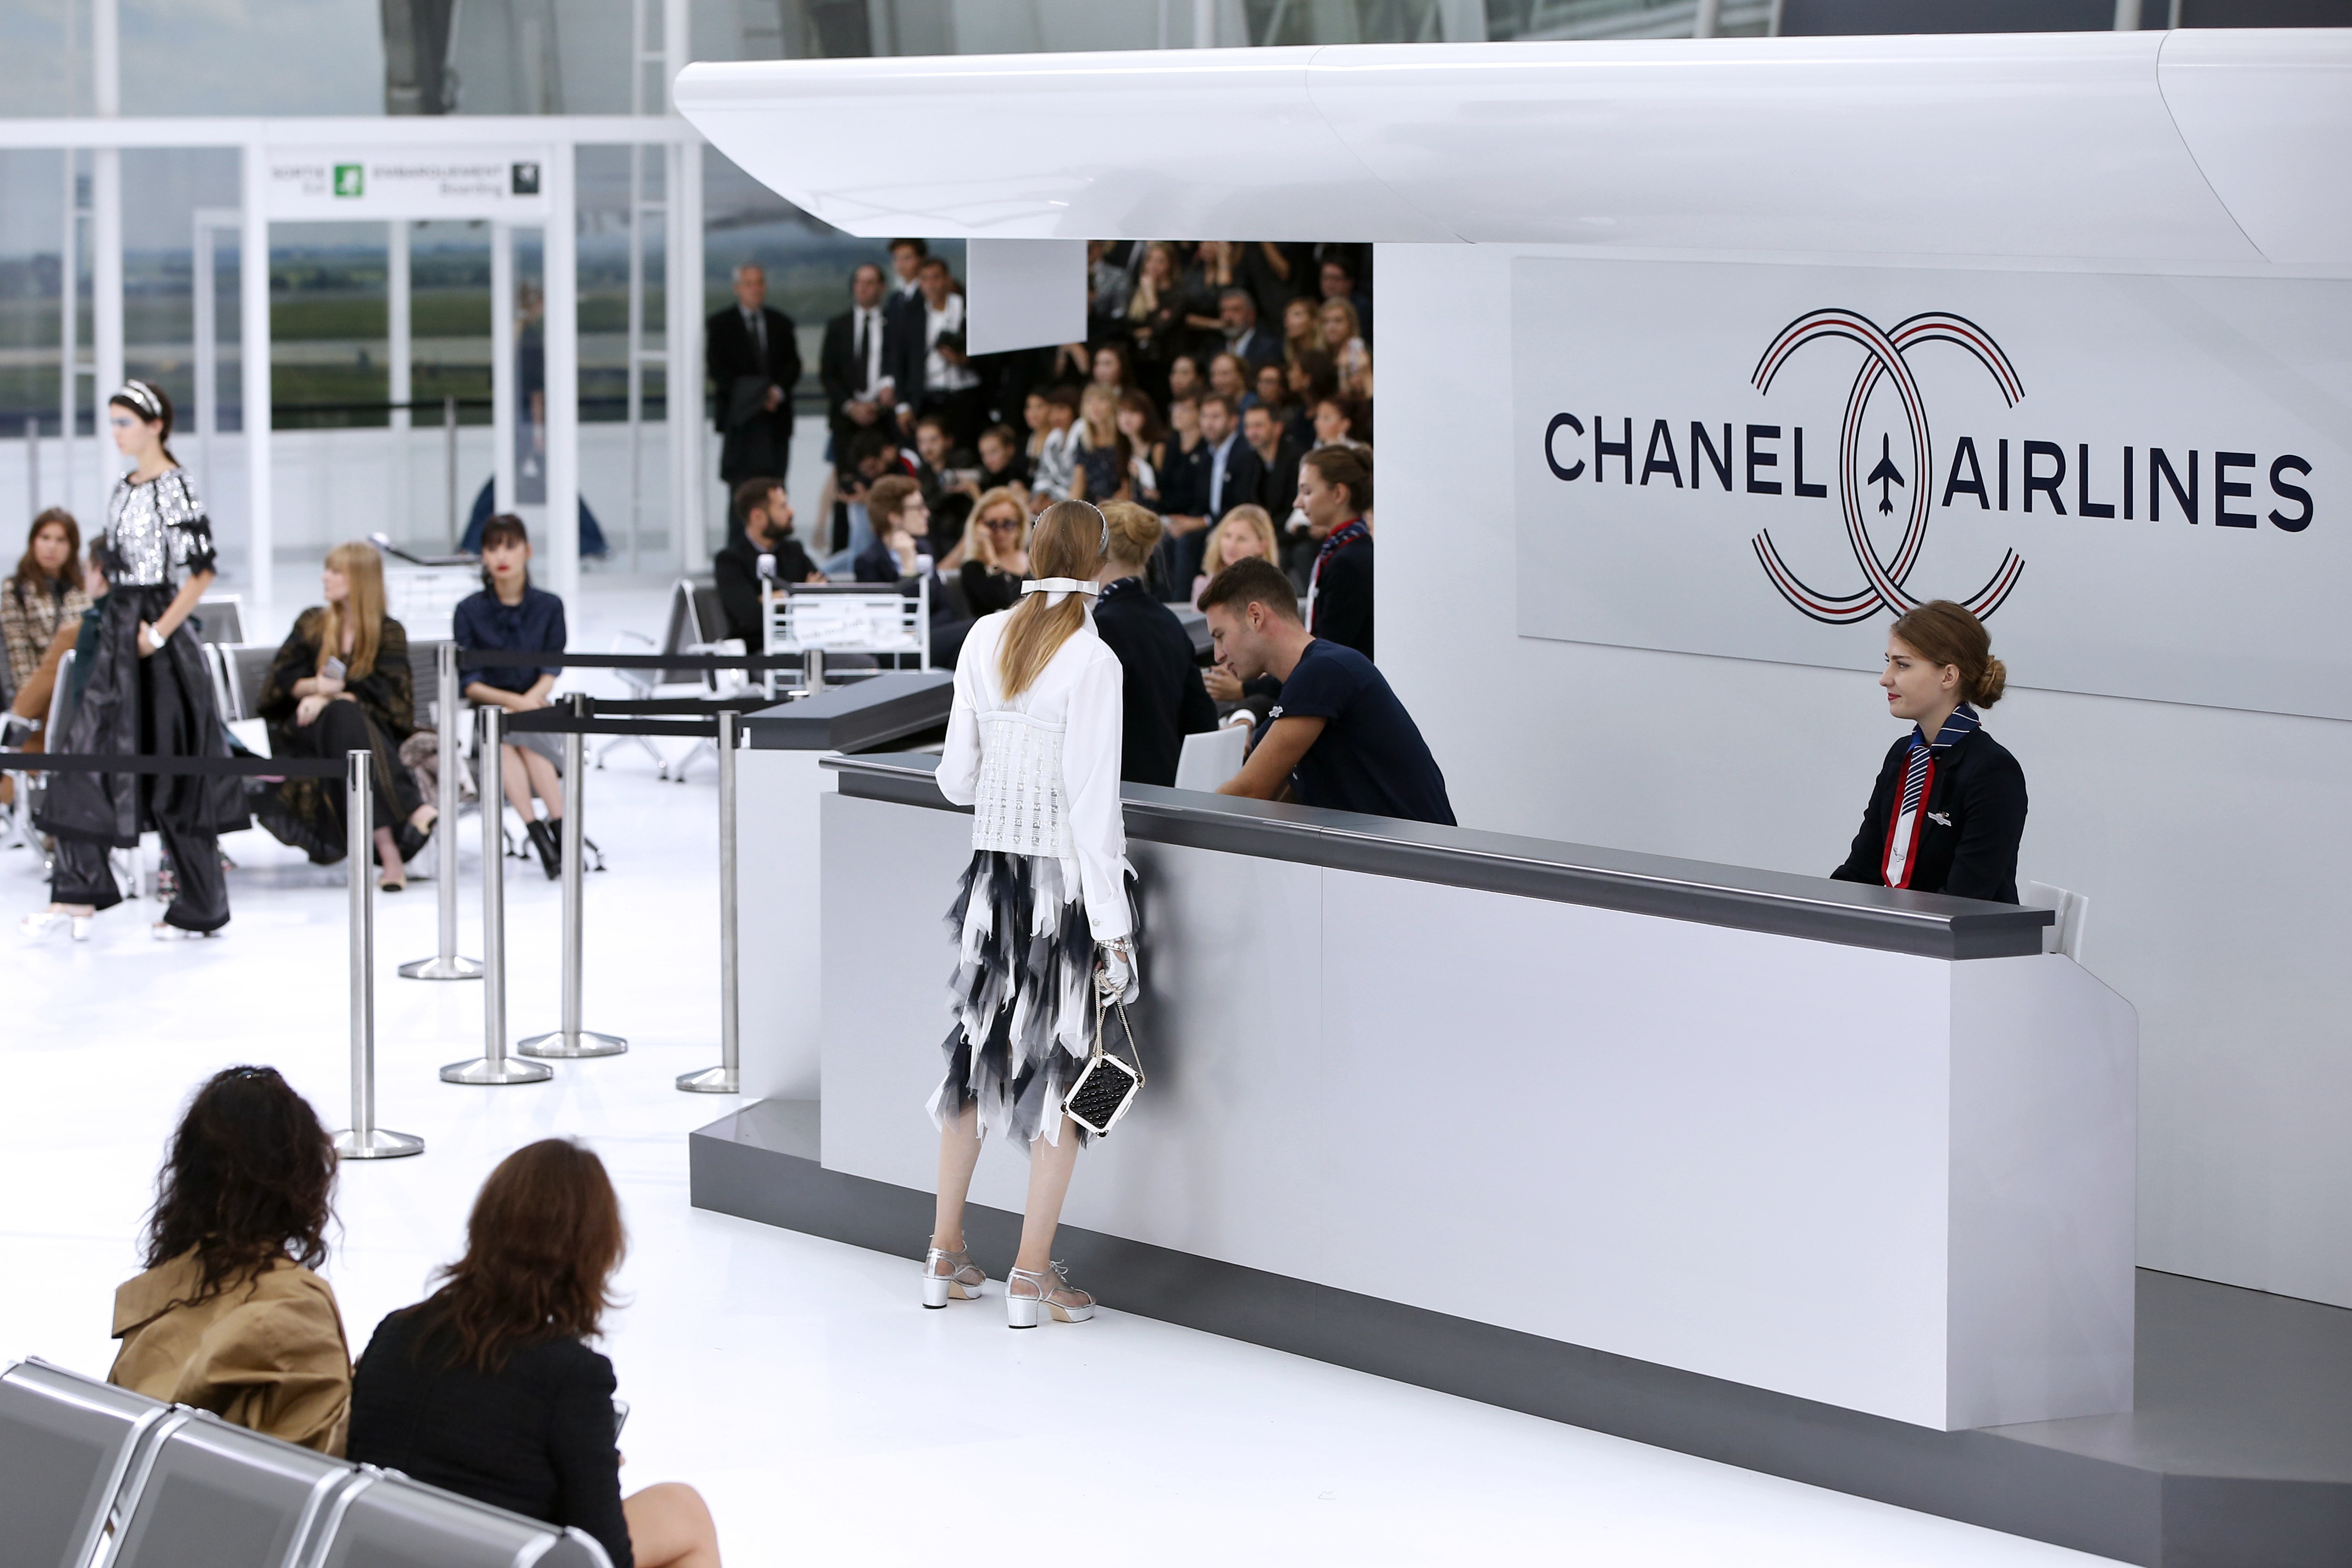 Cara Delevingne & Kendall Jenner Walk Chanel's Airport Runway — PHOTOS